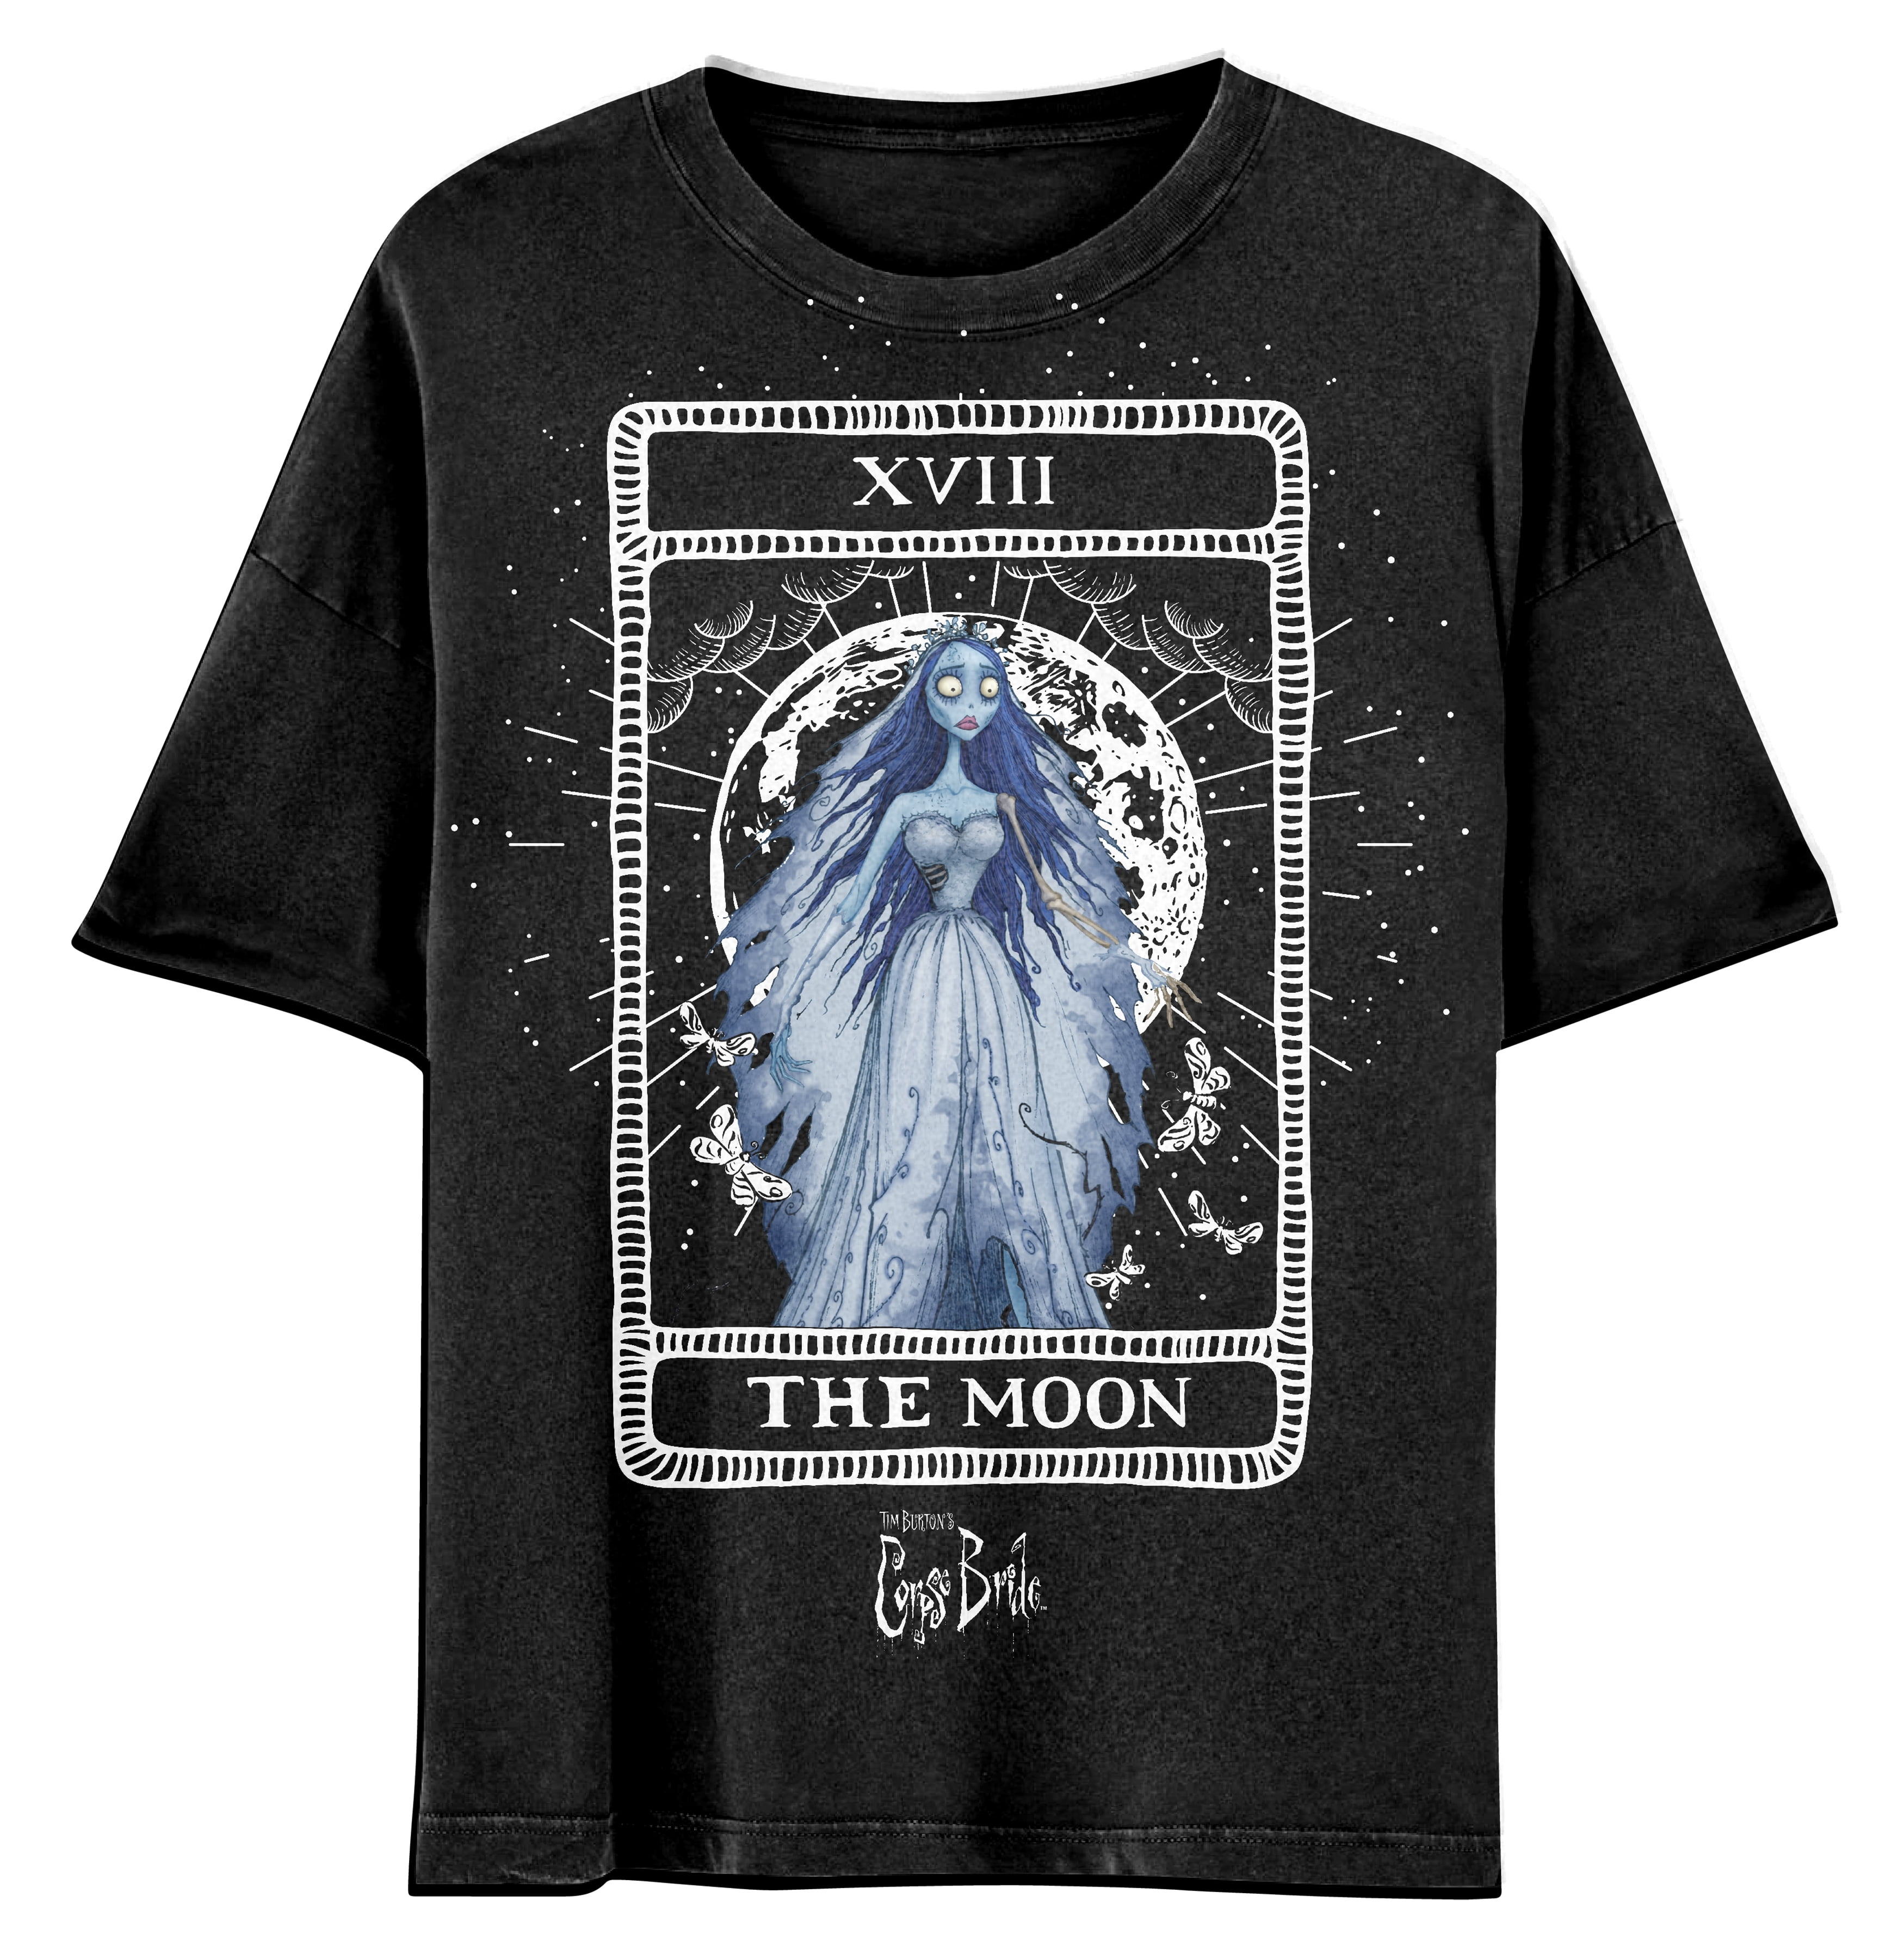 Warner Bros Tim Burton's Corpse Bride Mens and Womens Short Sleeve T-Shirt  (Black, S-XXL)